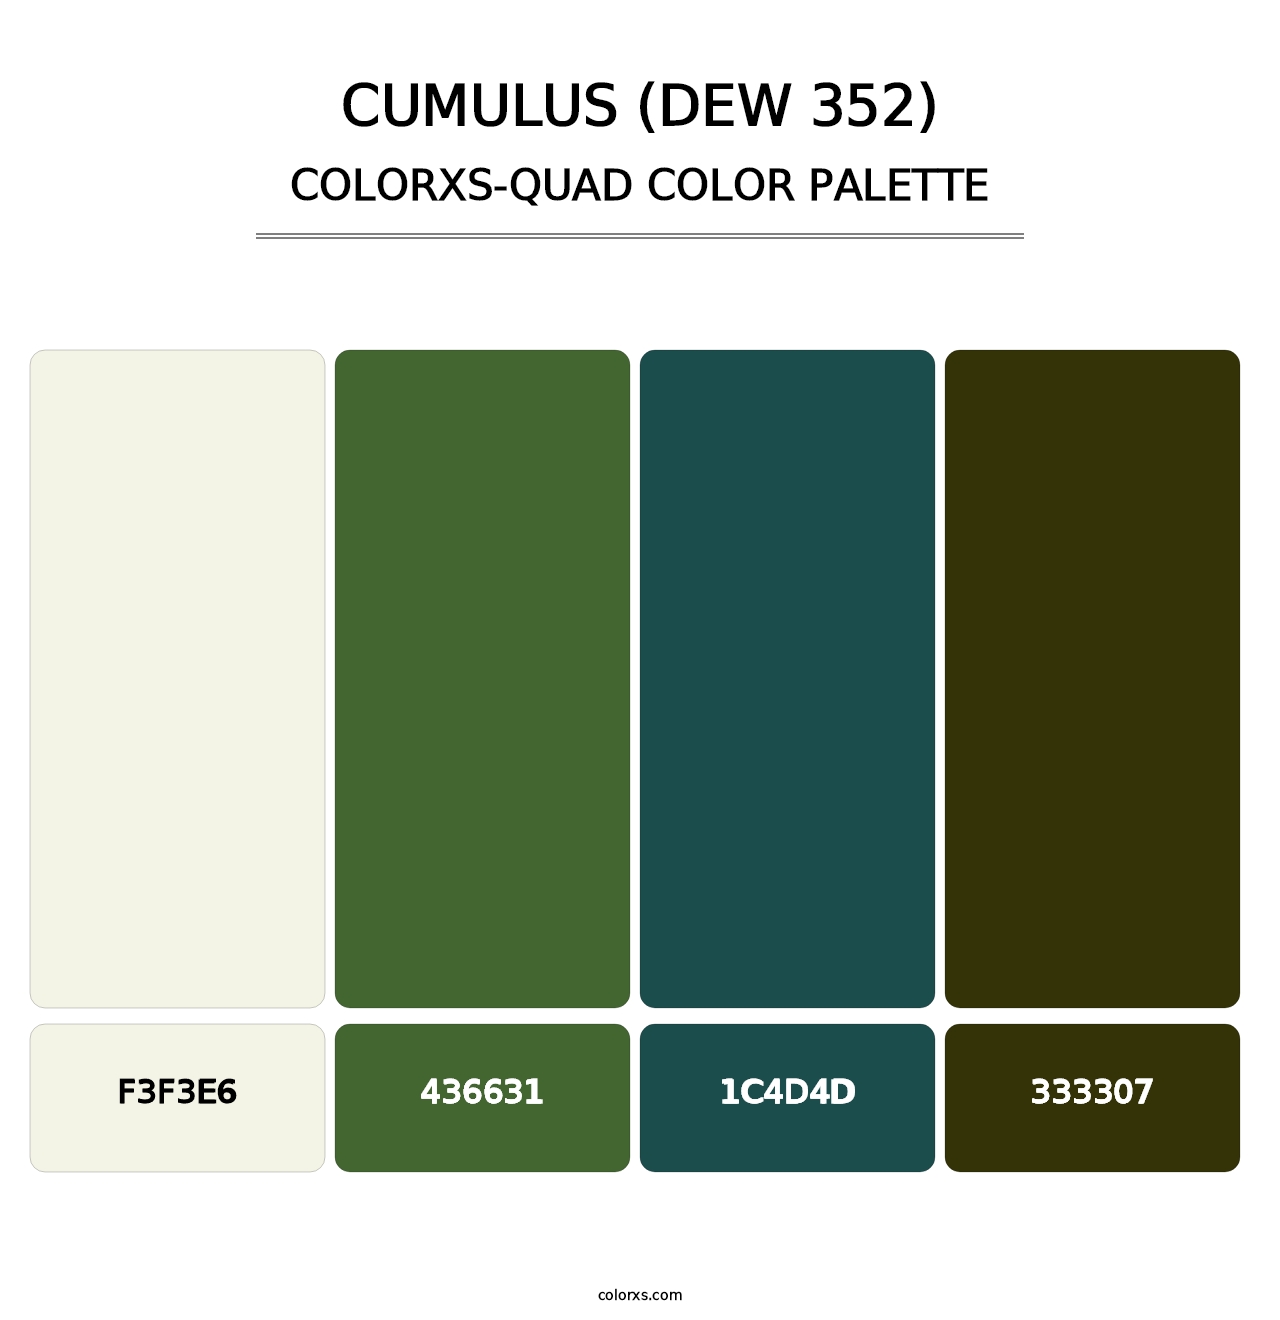 Cumulus (DEW 352) - Colorxs Quad Palette